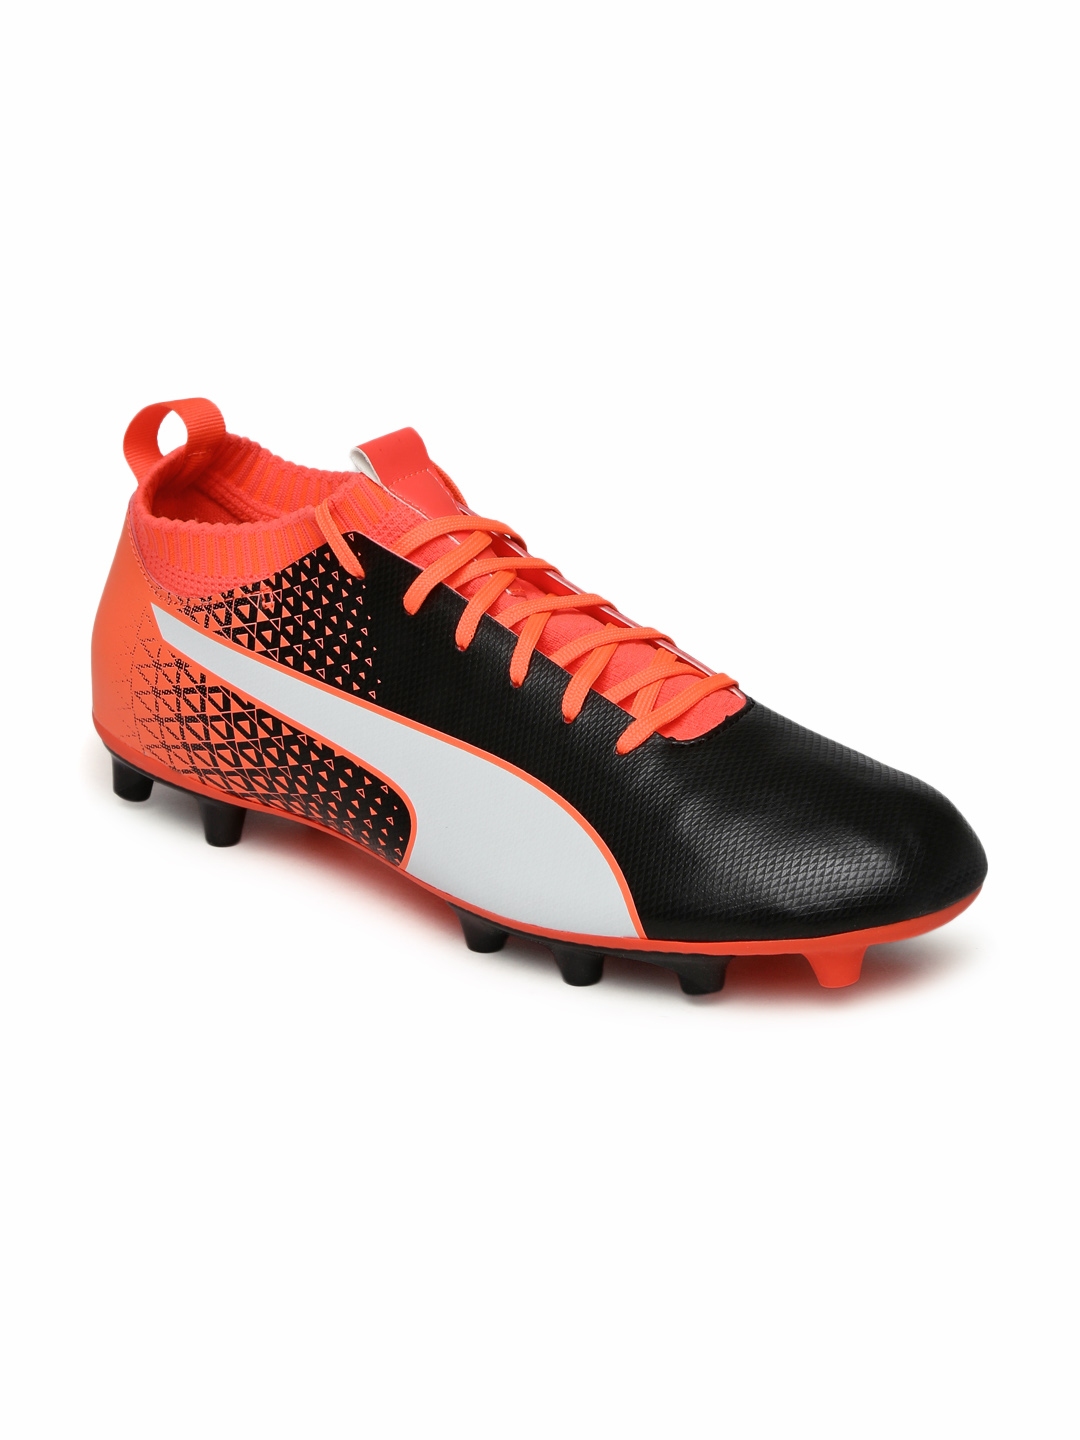 Coral EvoKNIT FTB AG Football Shoes 